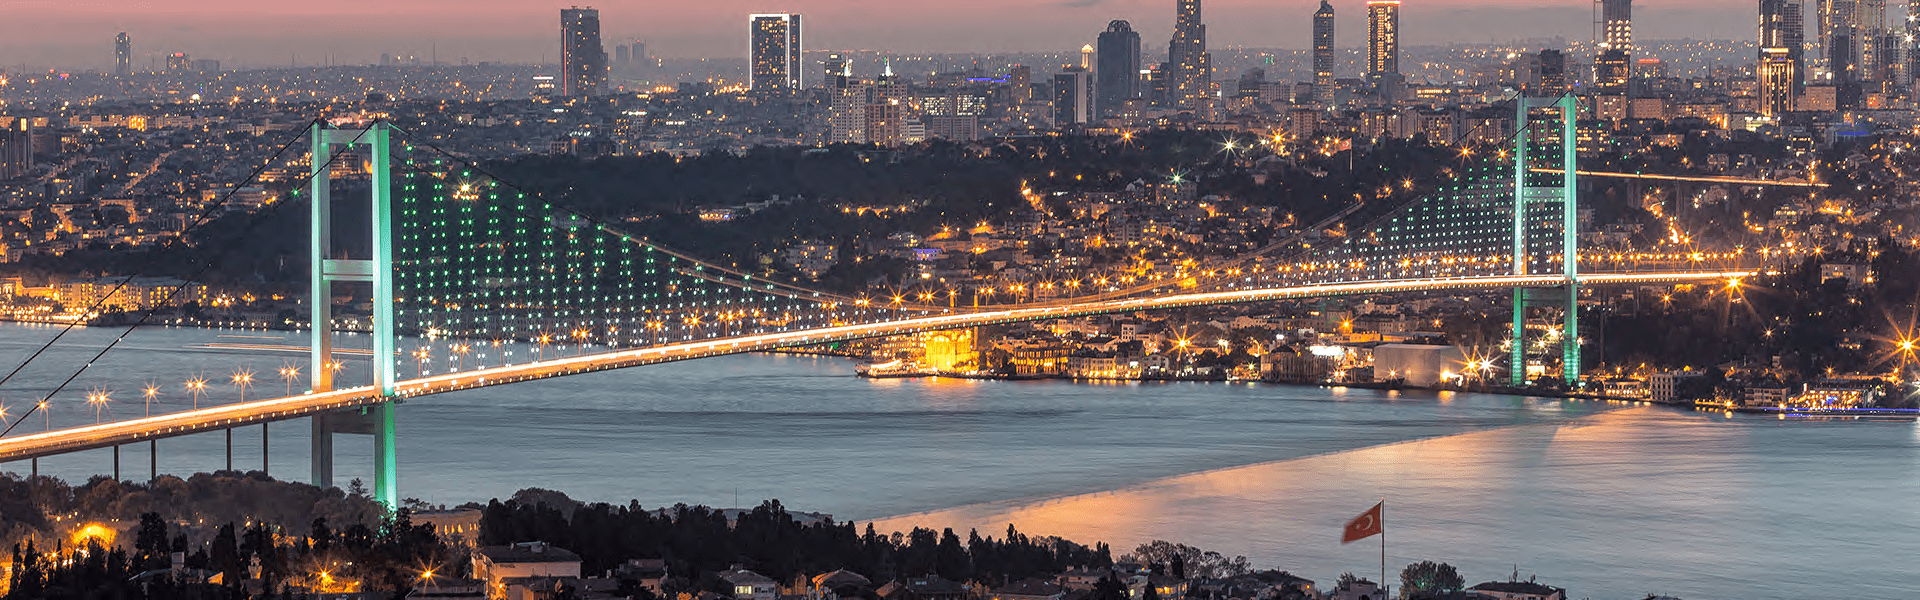 istanbul-hero-image